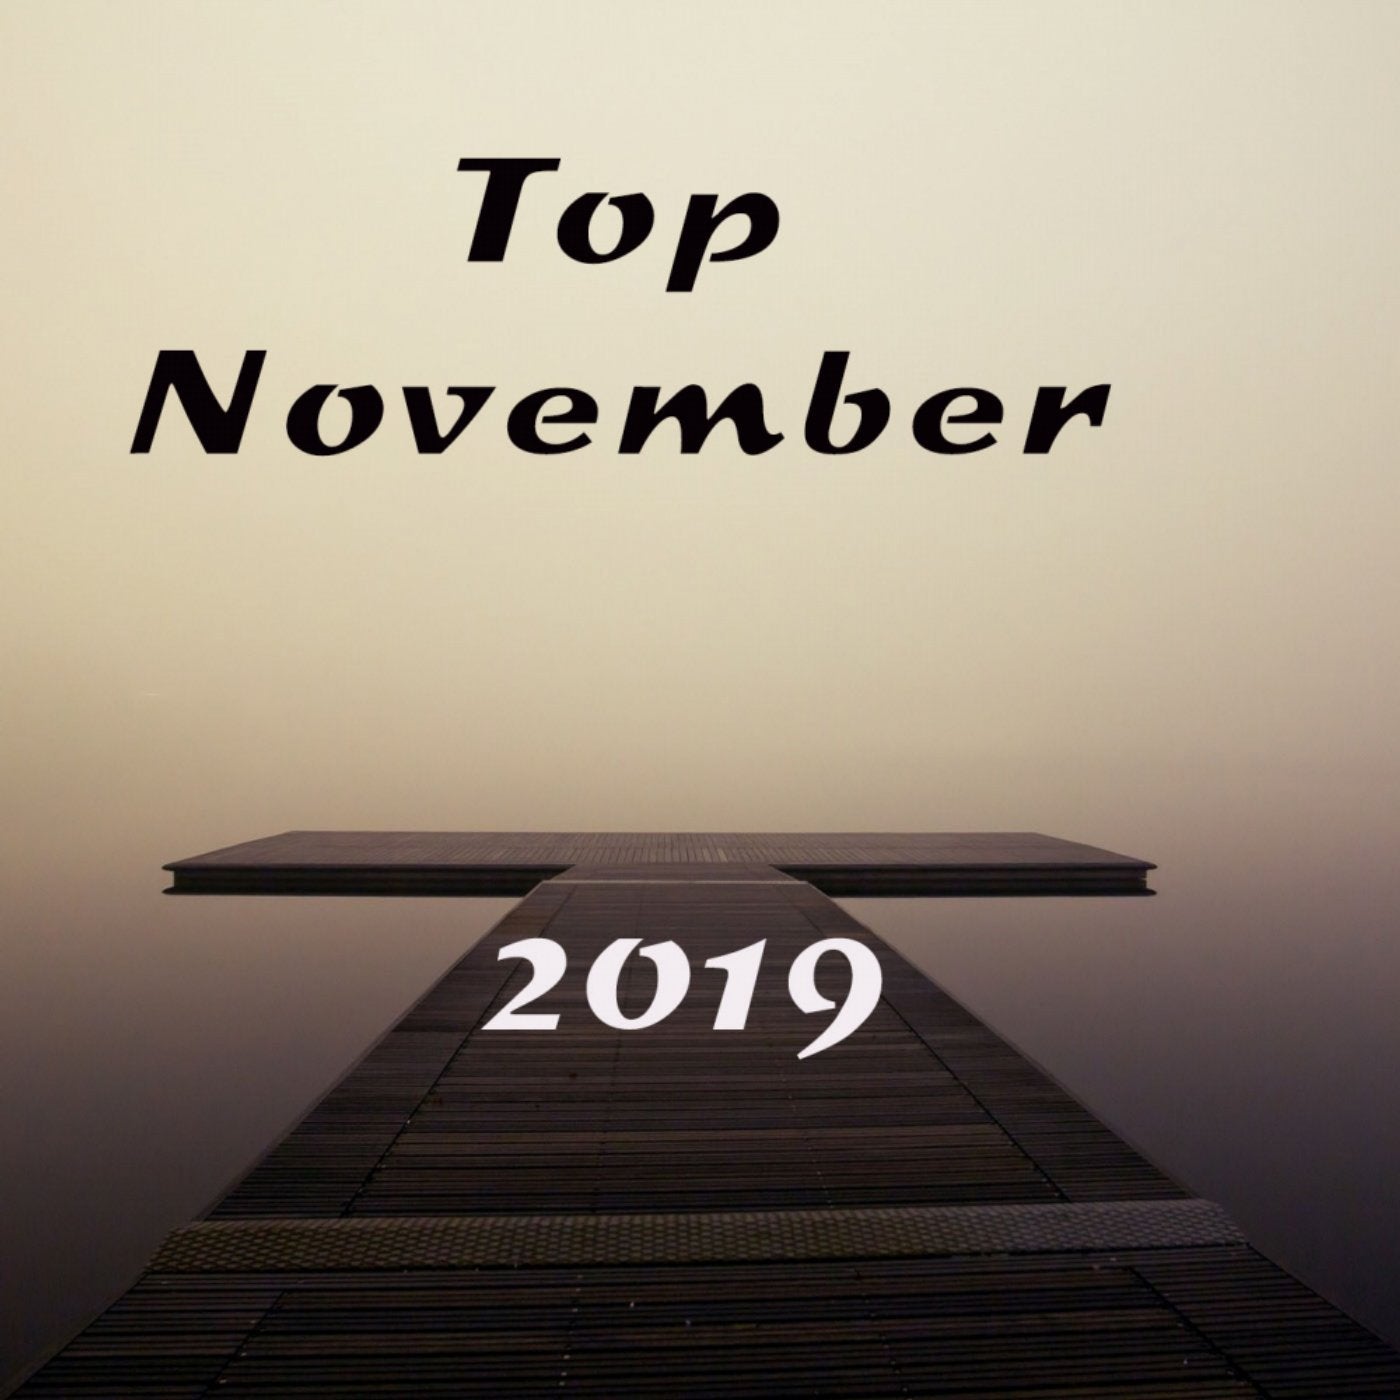 Top November 2019